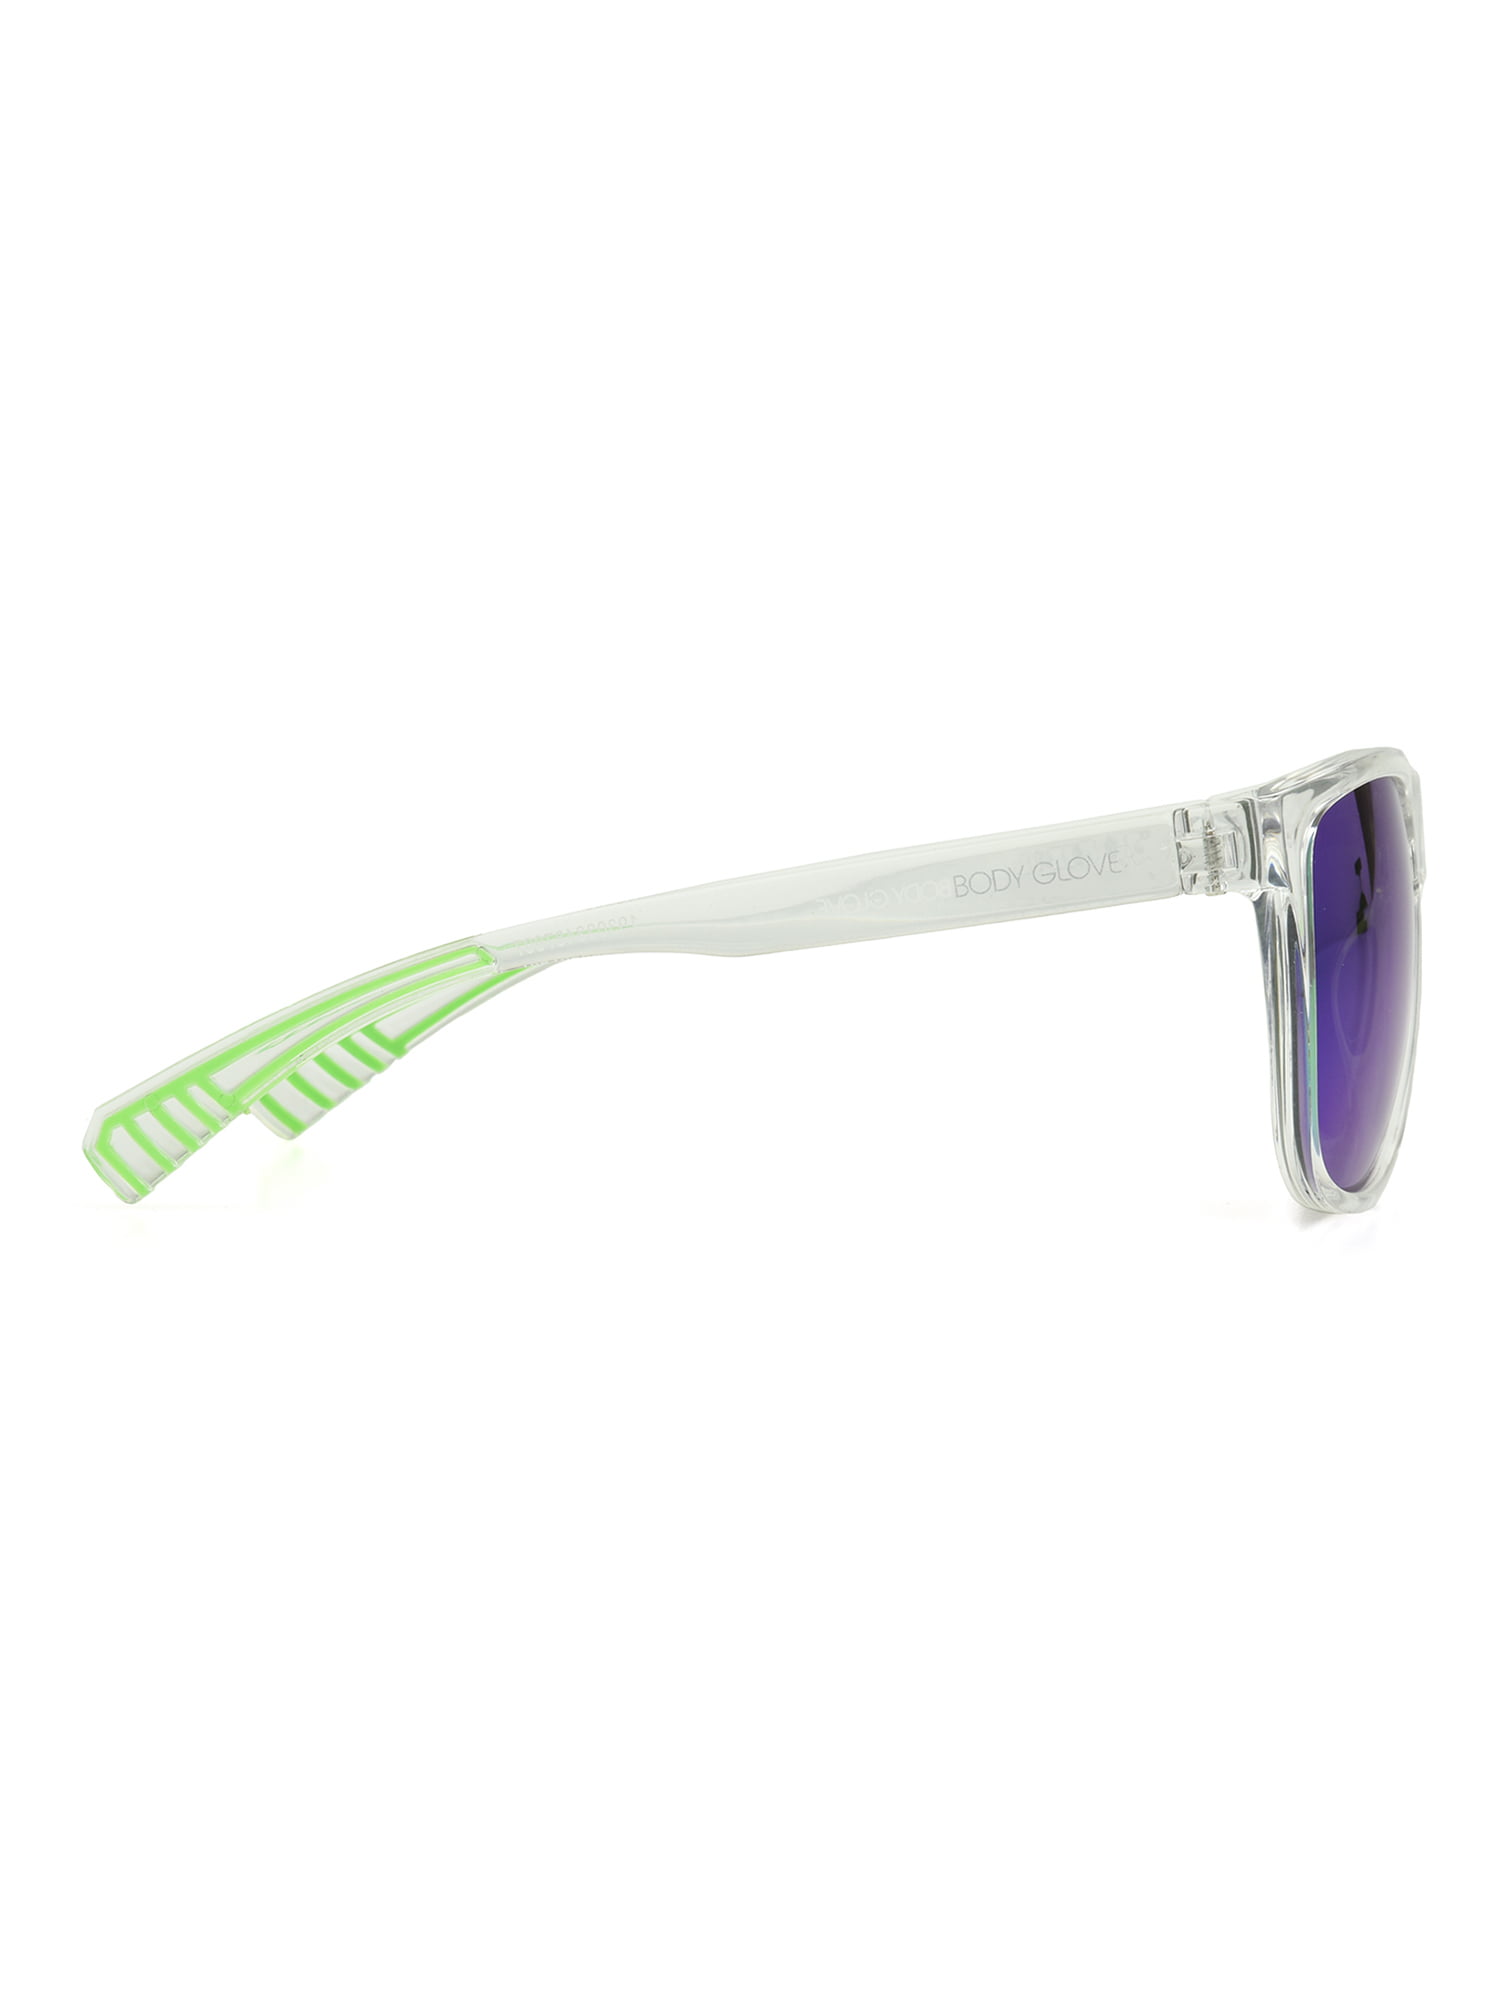 Body Glove Sports Sunglasses for Men